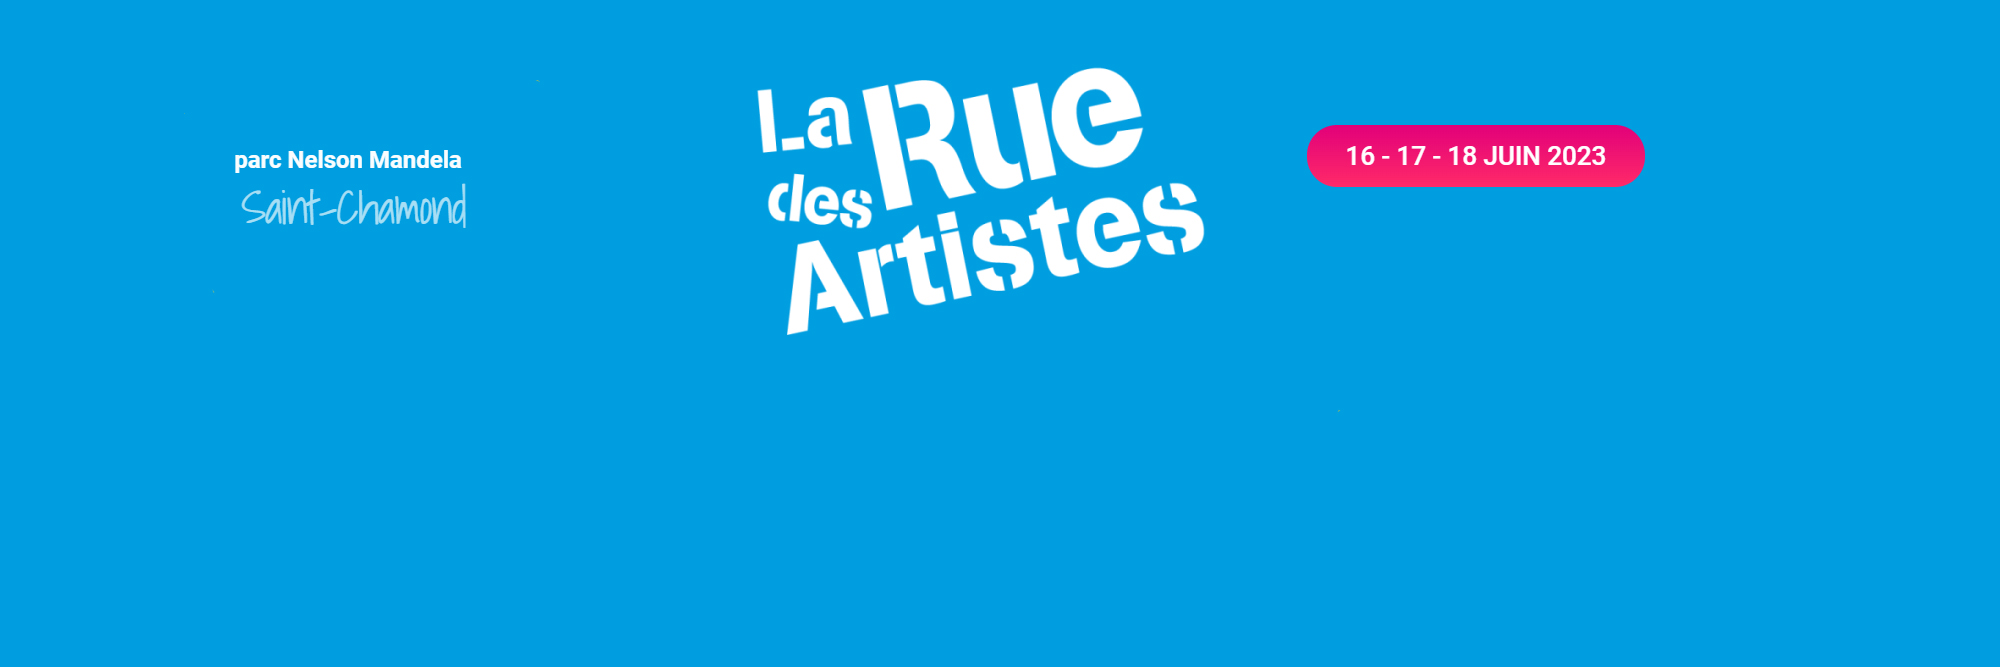 Festival La rue des artistes